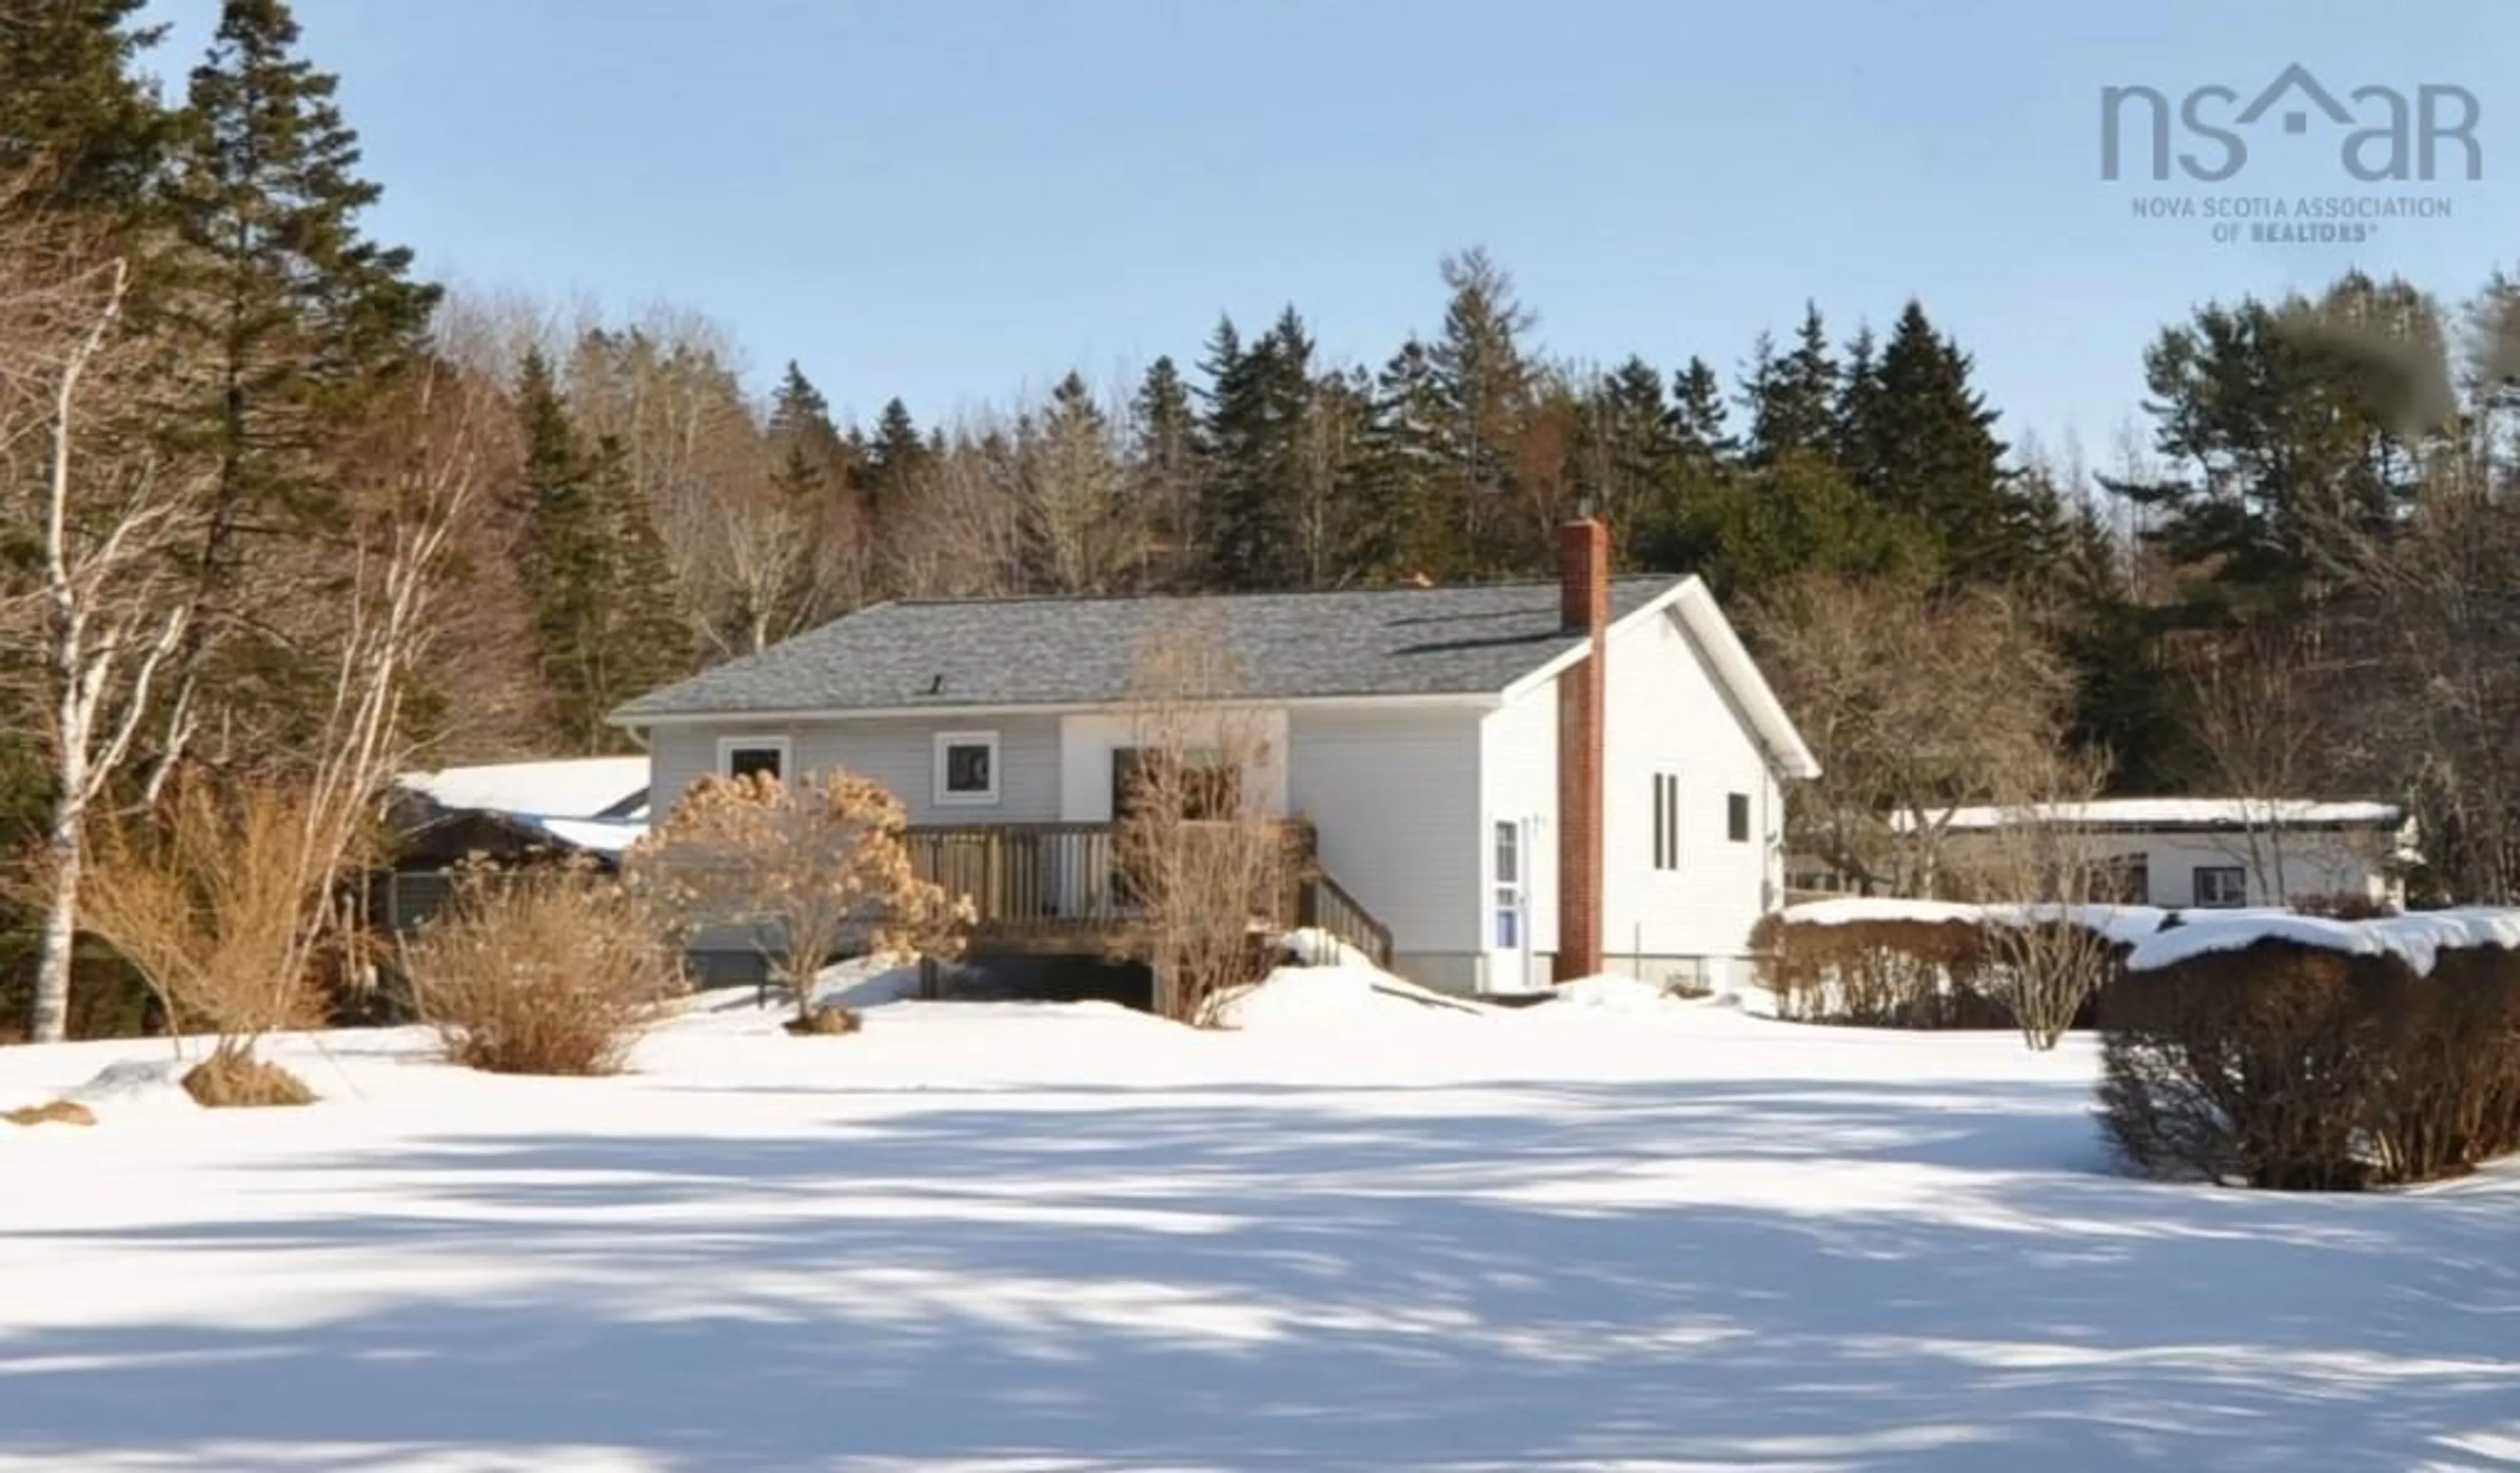 Home with unknown exterior material for 24 Ballfield Rd, Tantallon Nova Scotia B3Z 4B1